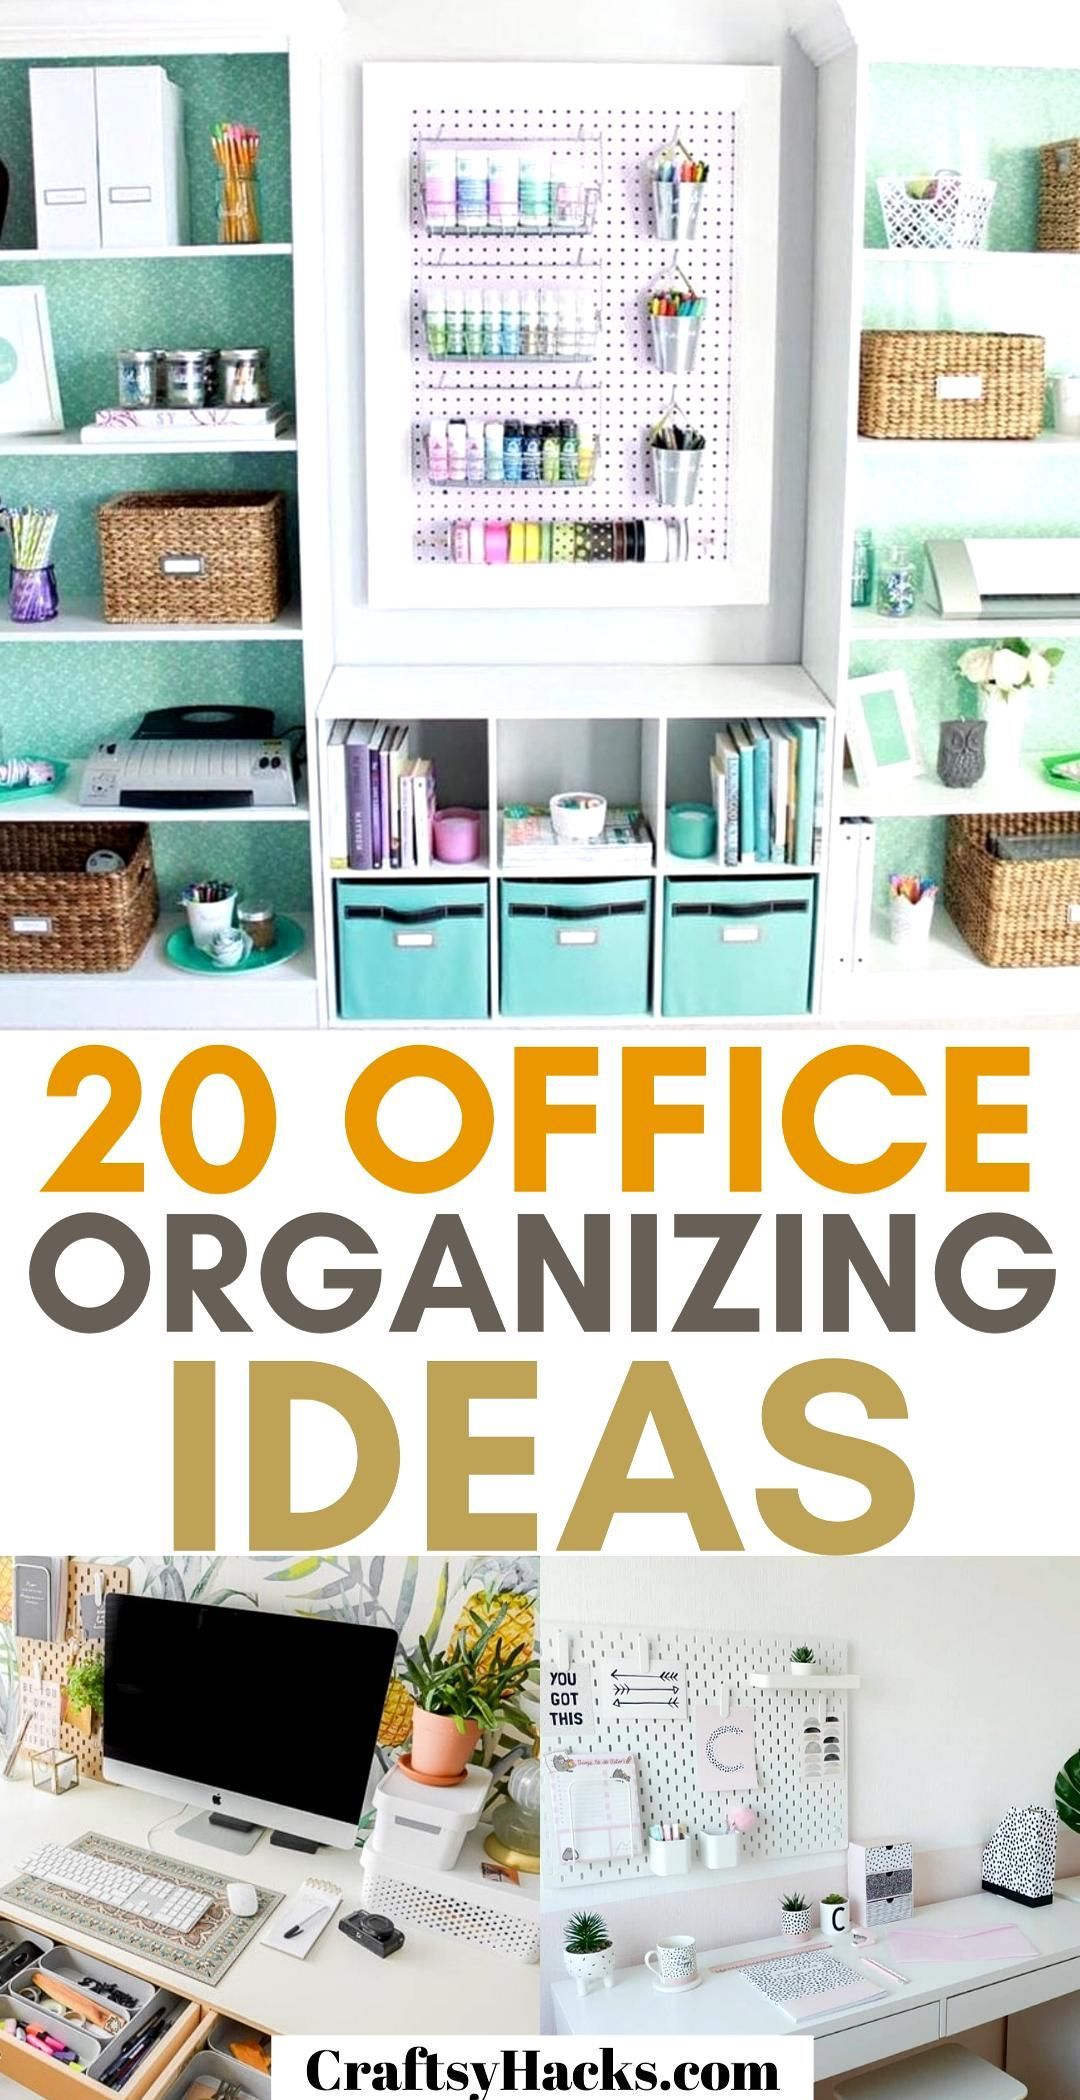 20 Office Organizing Ideas - 20 Office Organizing Ideas -   19 diy Organization bedroom ideas